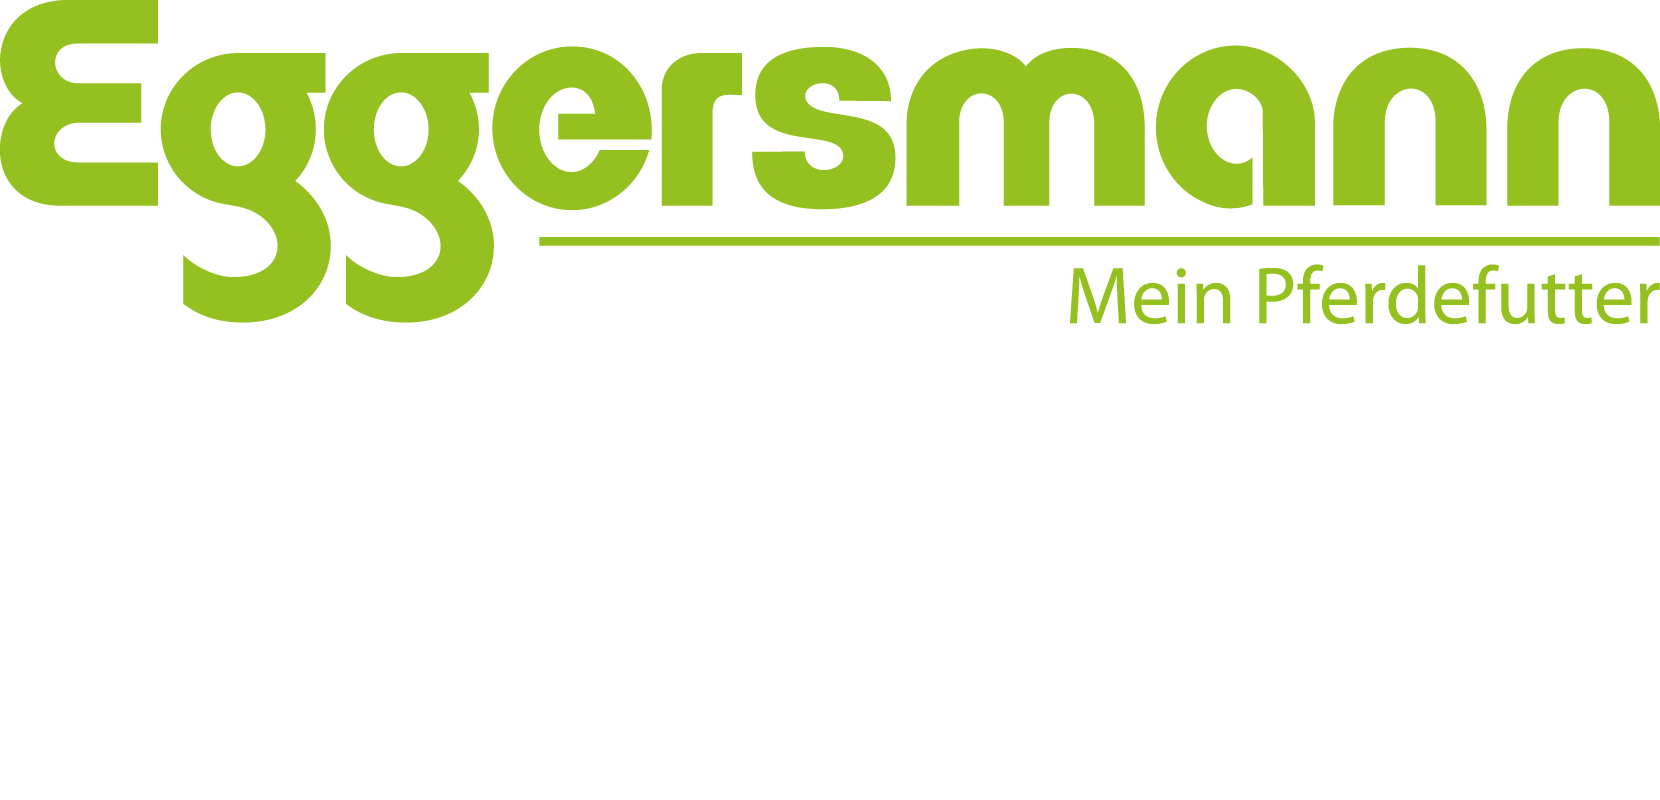 Eggersmann - Mein Pferdefutter